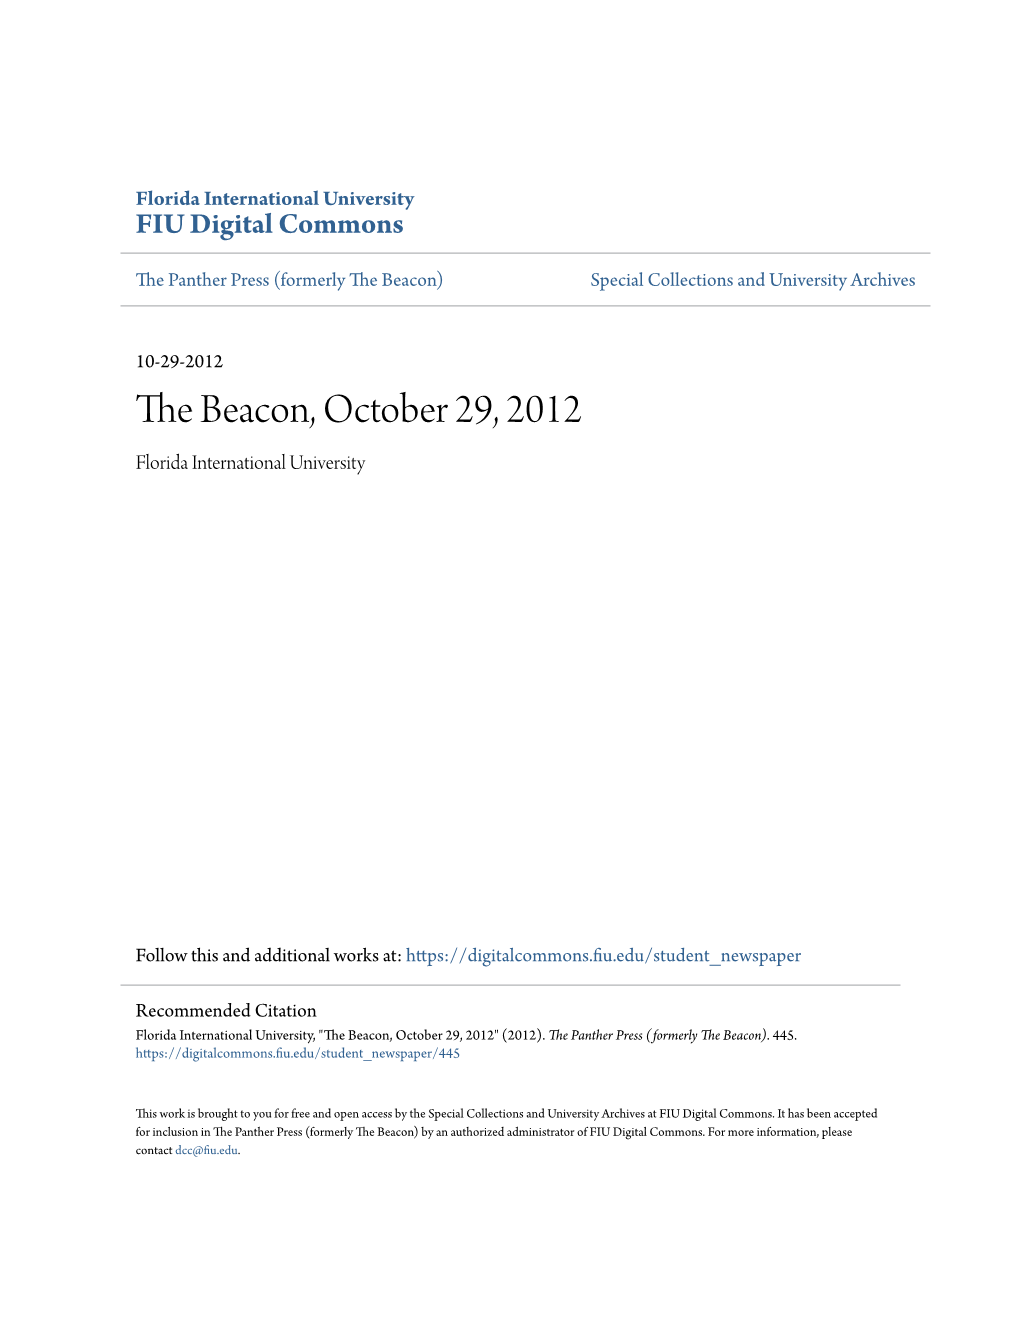 The Beacon, October 29, 2012 Florida International University